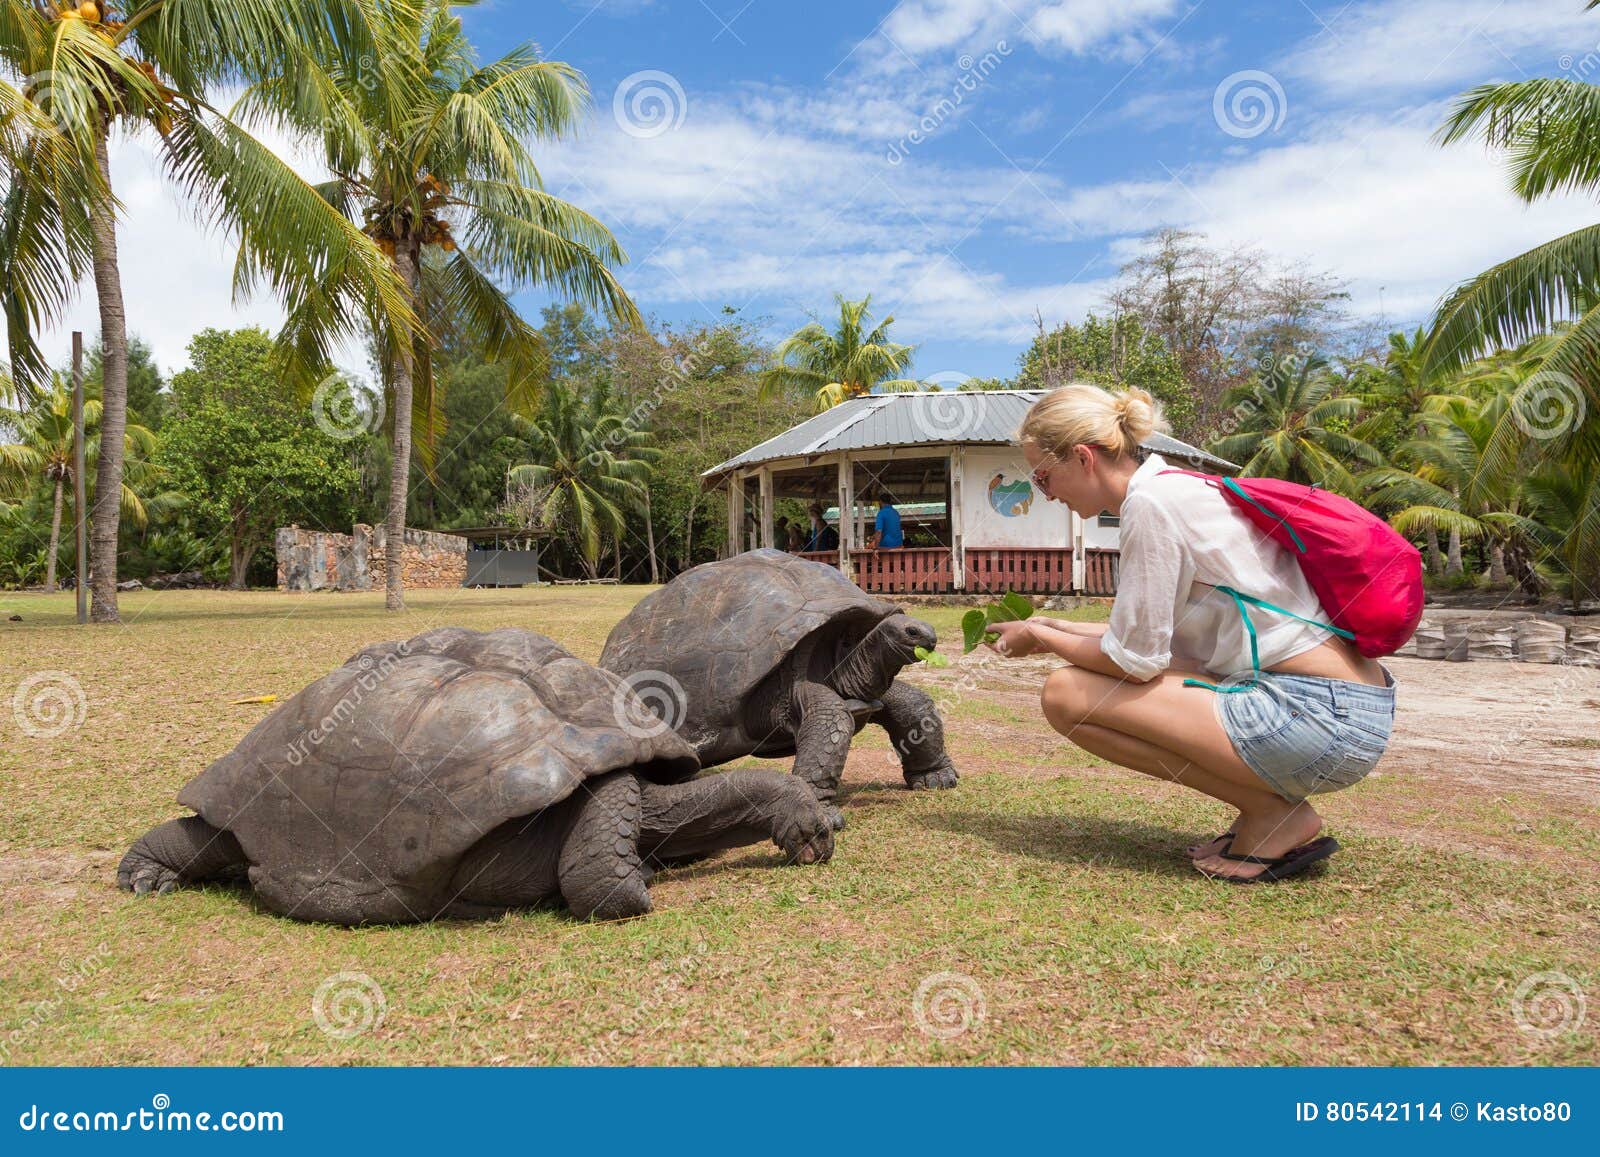 tourist feeding aldabra giant tortoises on curieuse island, seychelles.